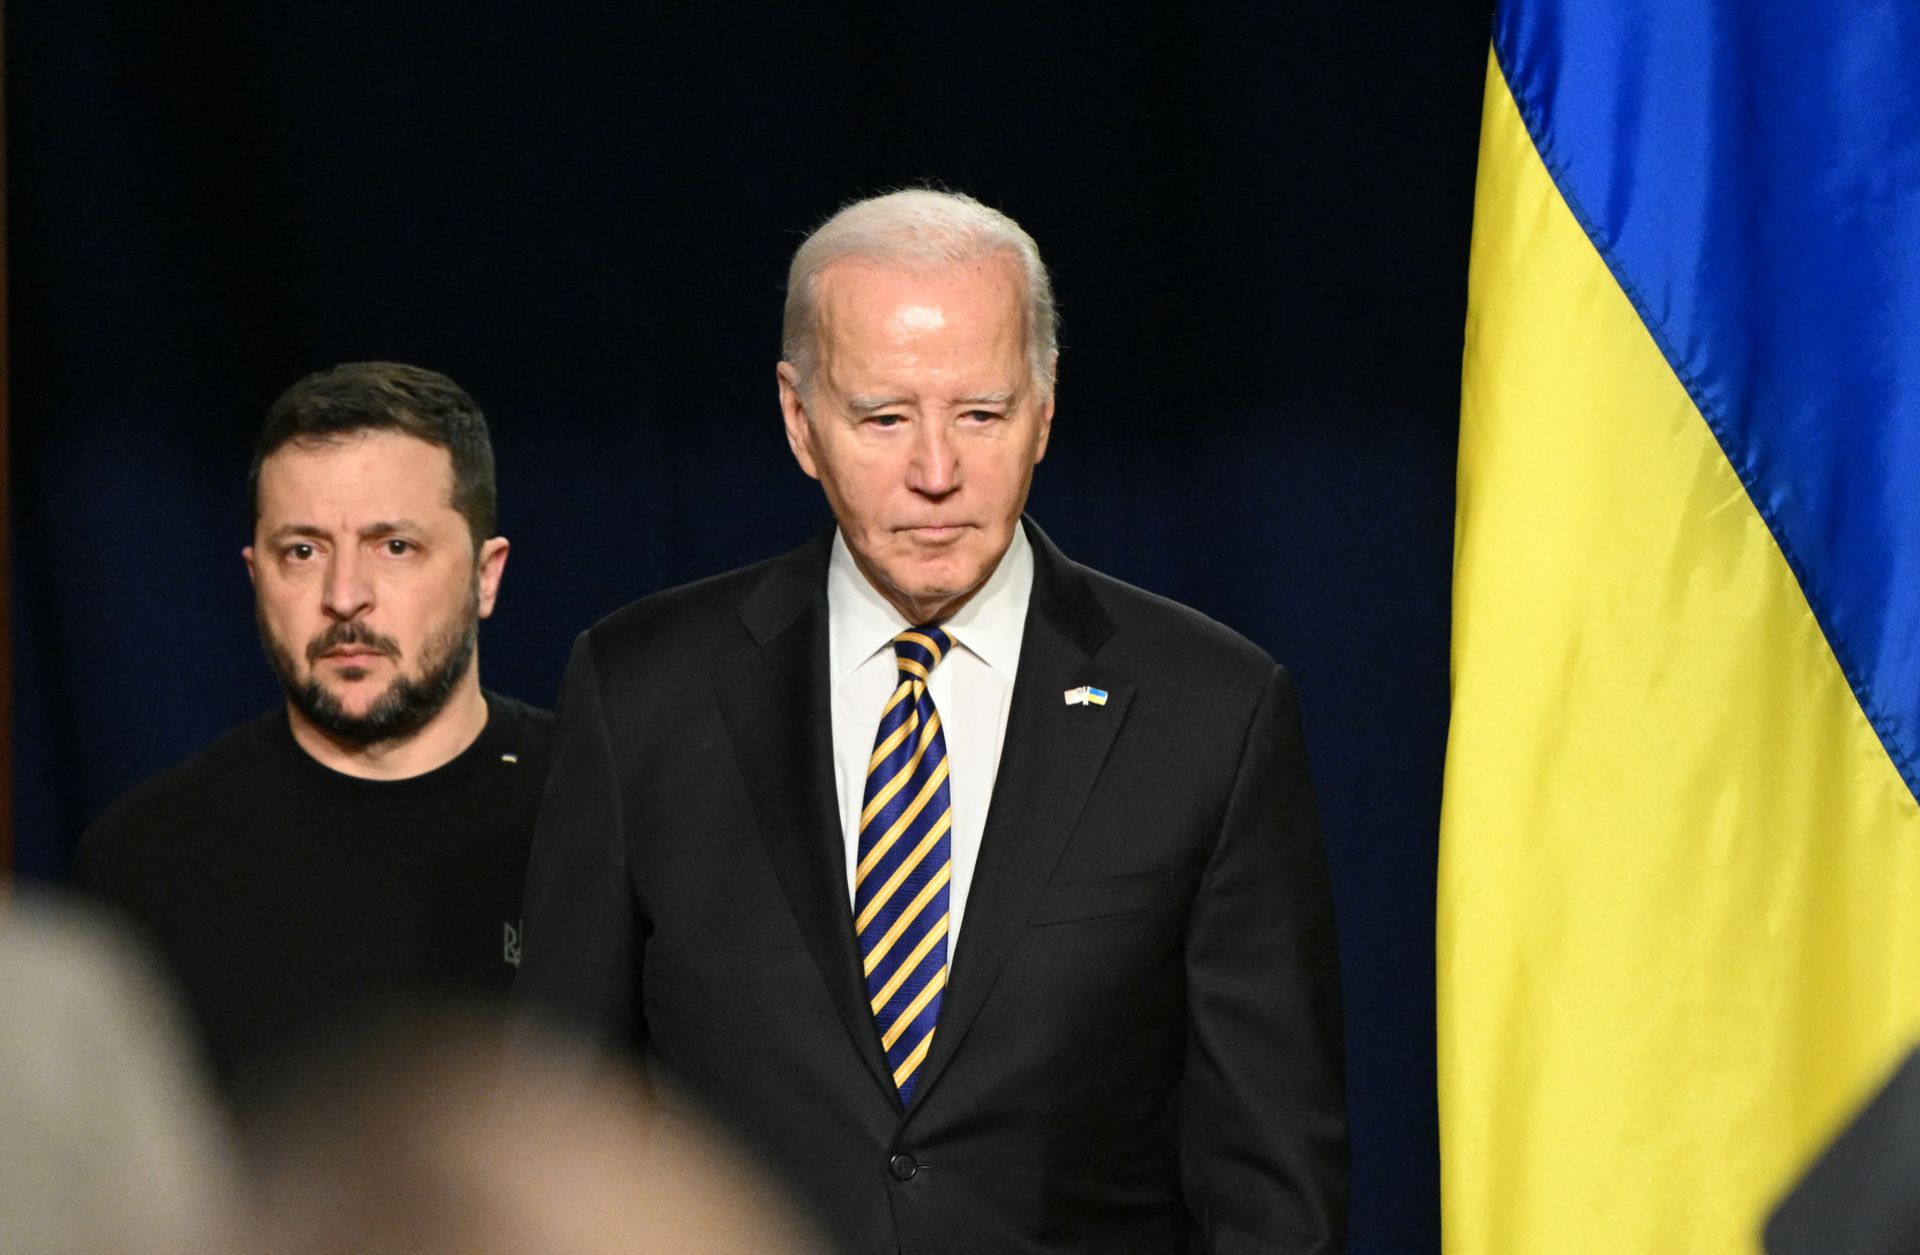 U.S. President Joe Biden and Ukrainian President Volodymyr Zelensky arrive to hold a press conference at the White House in Washington, D.C., on Dec. 12, 2023.